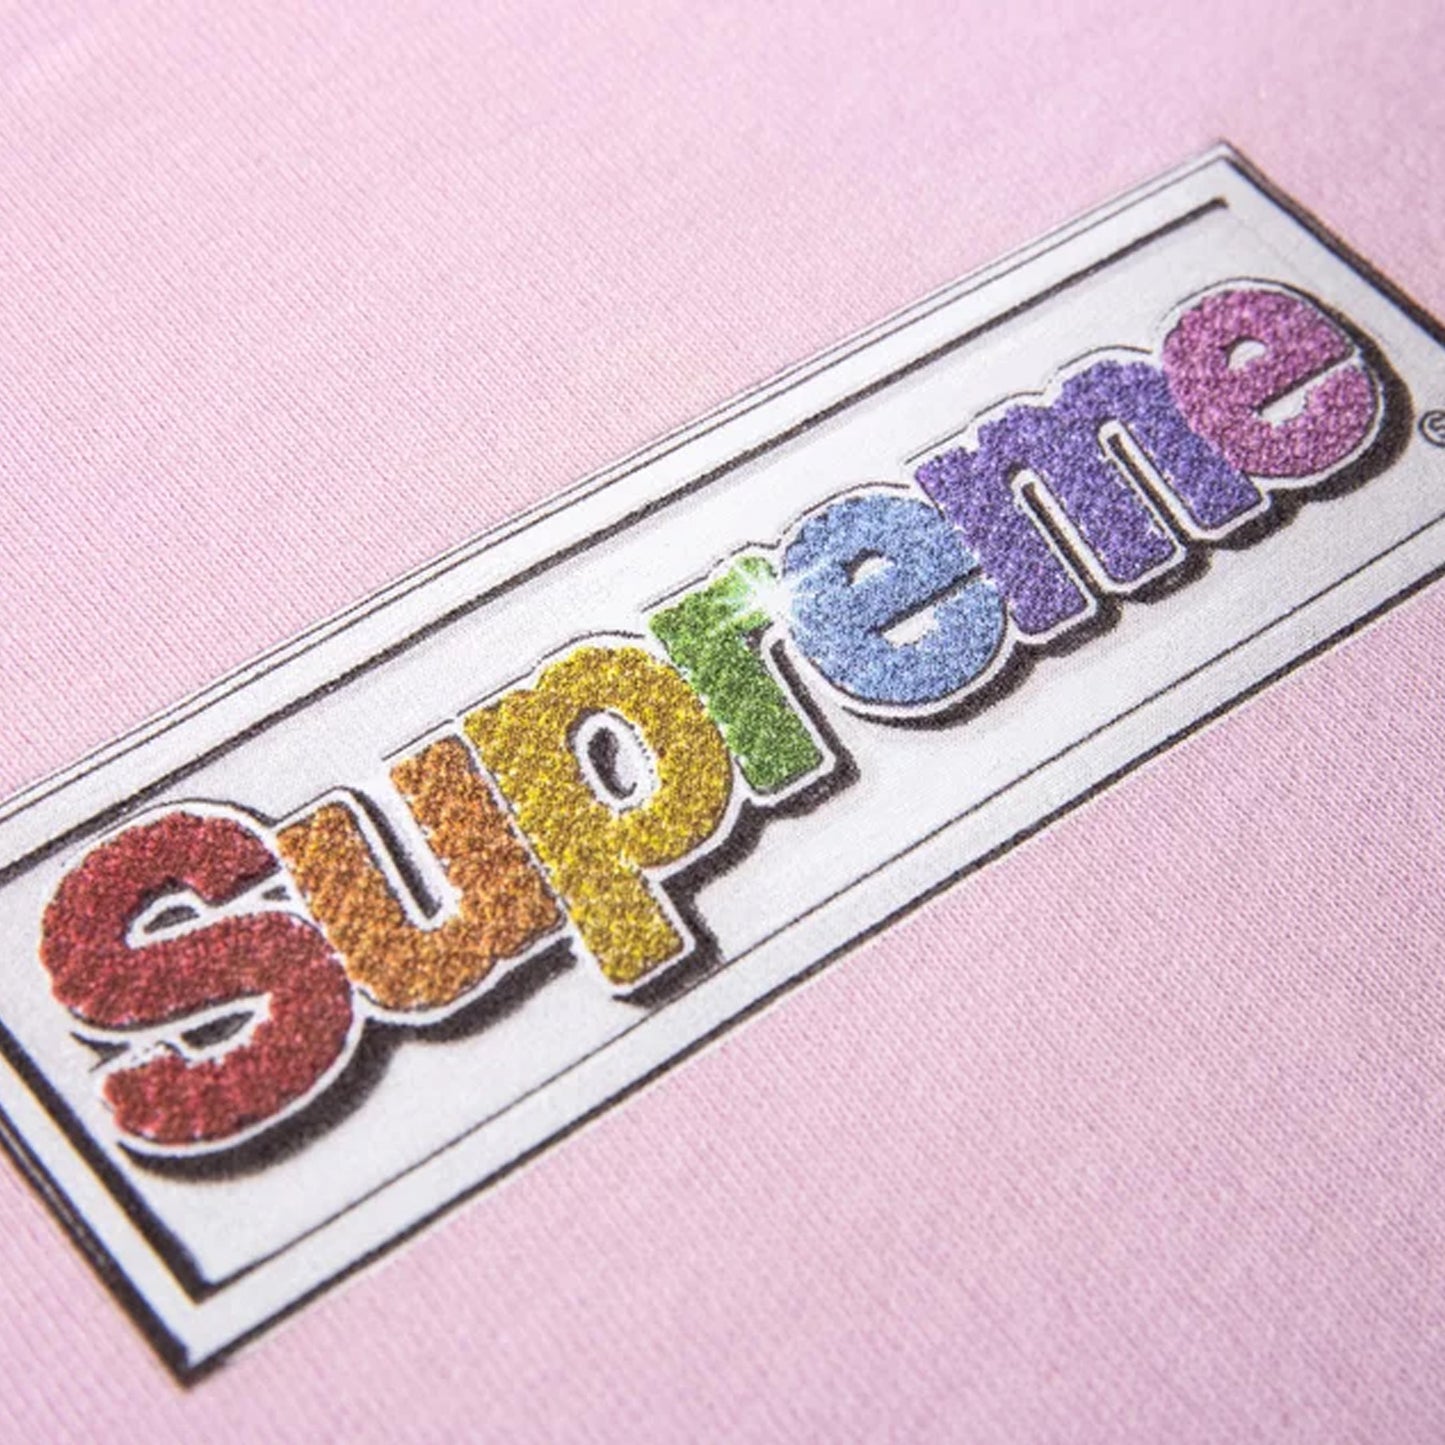 Supreme Bling Box Logo Hooded Sweatshirt Light Pink (SS22)